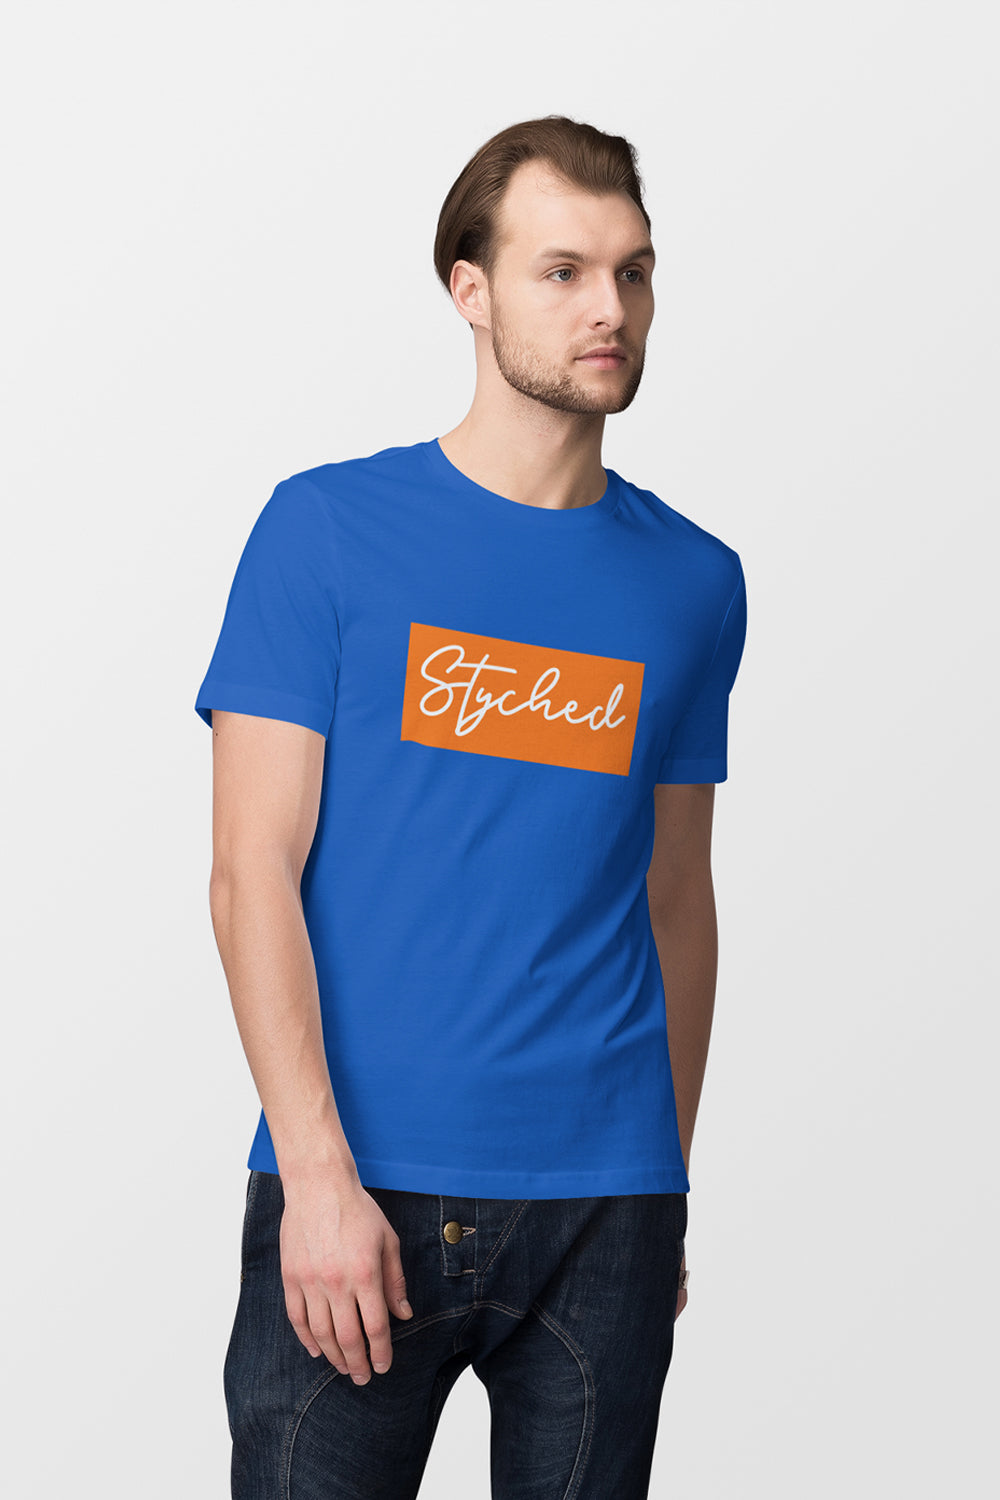 Orange Styched Logo Graphic Printed Blue Tshirt